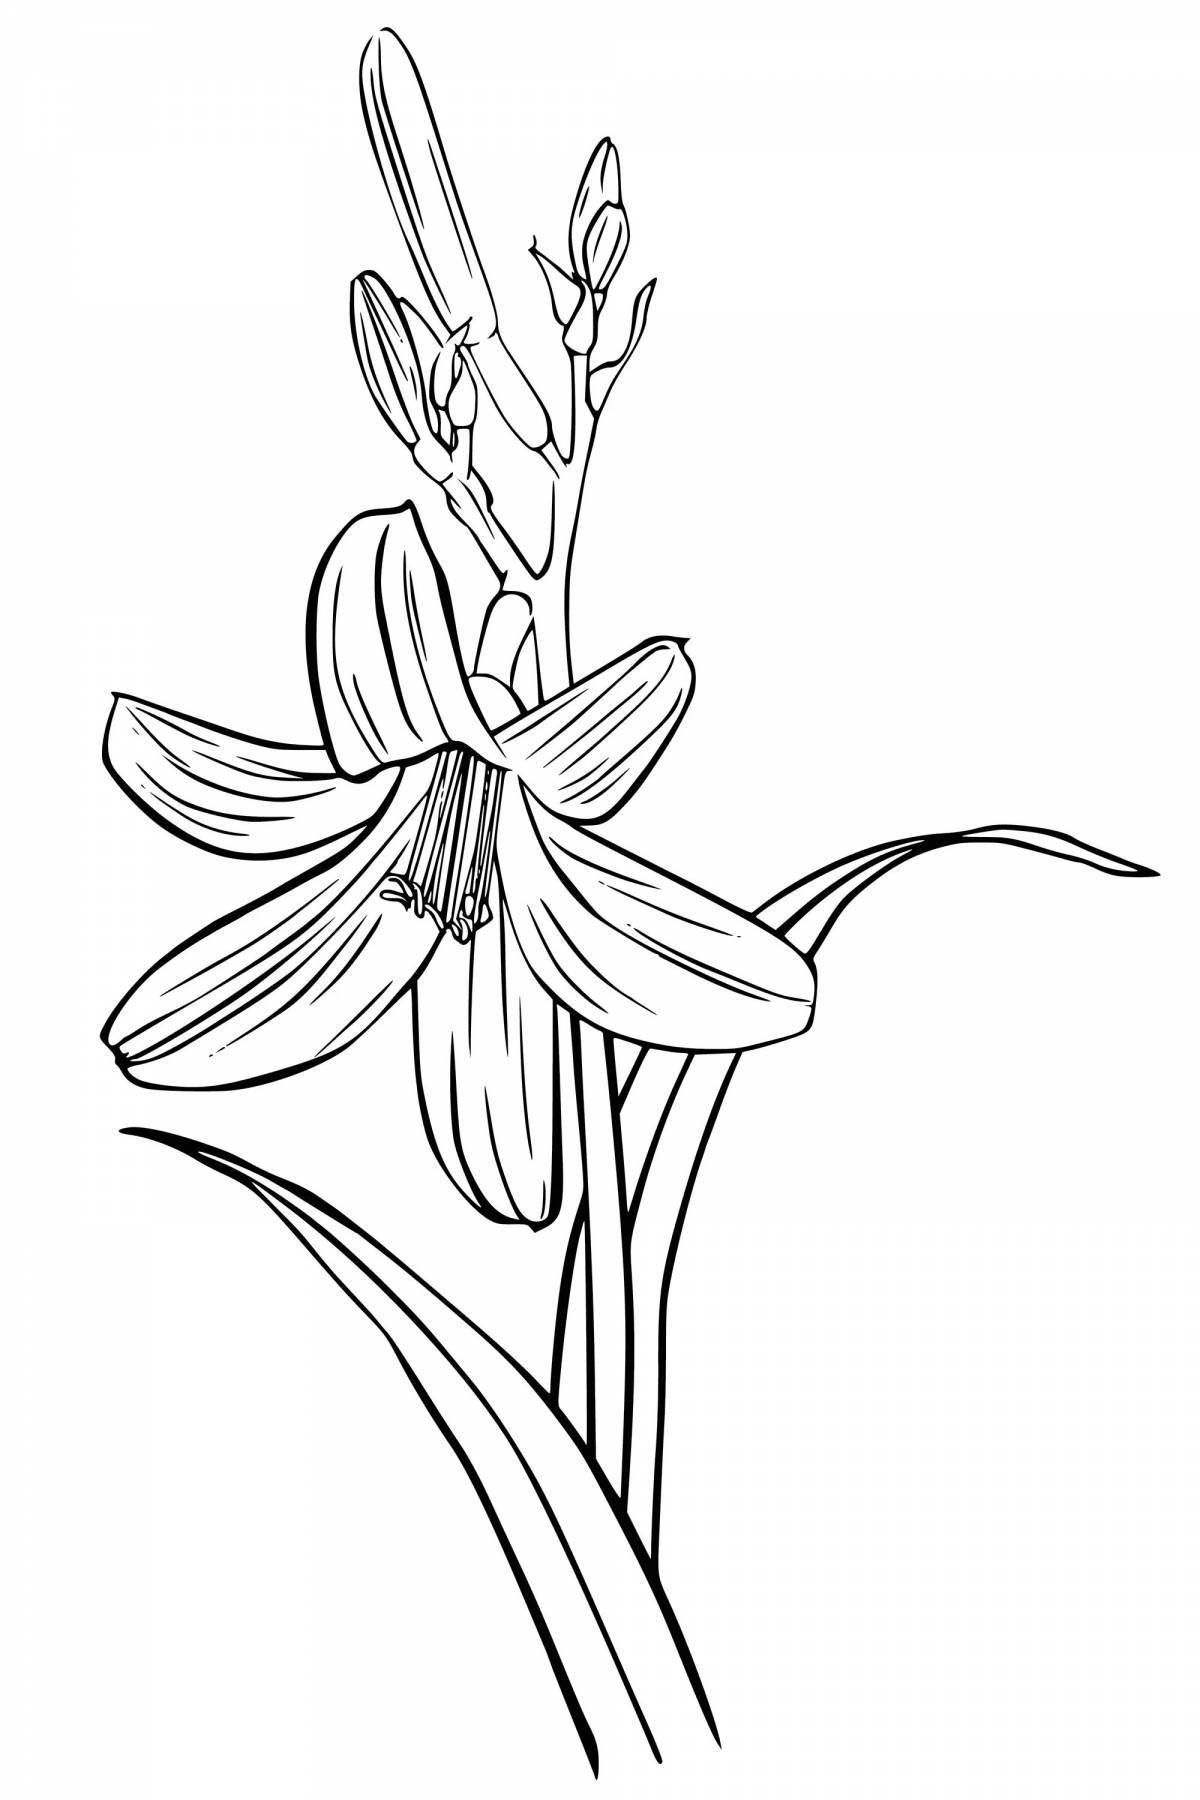 Charming lily saranka coloring book